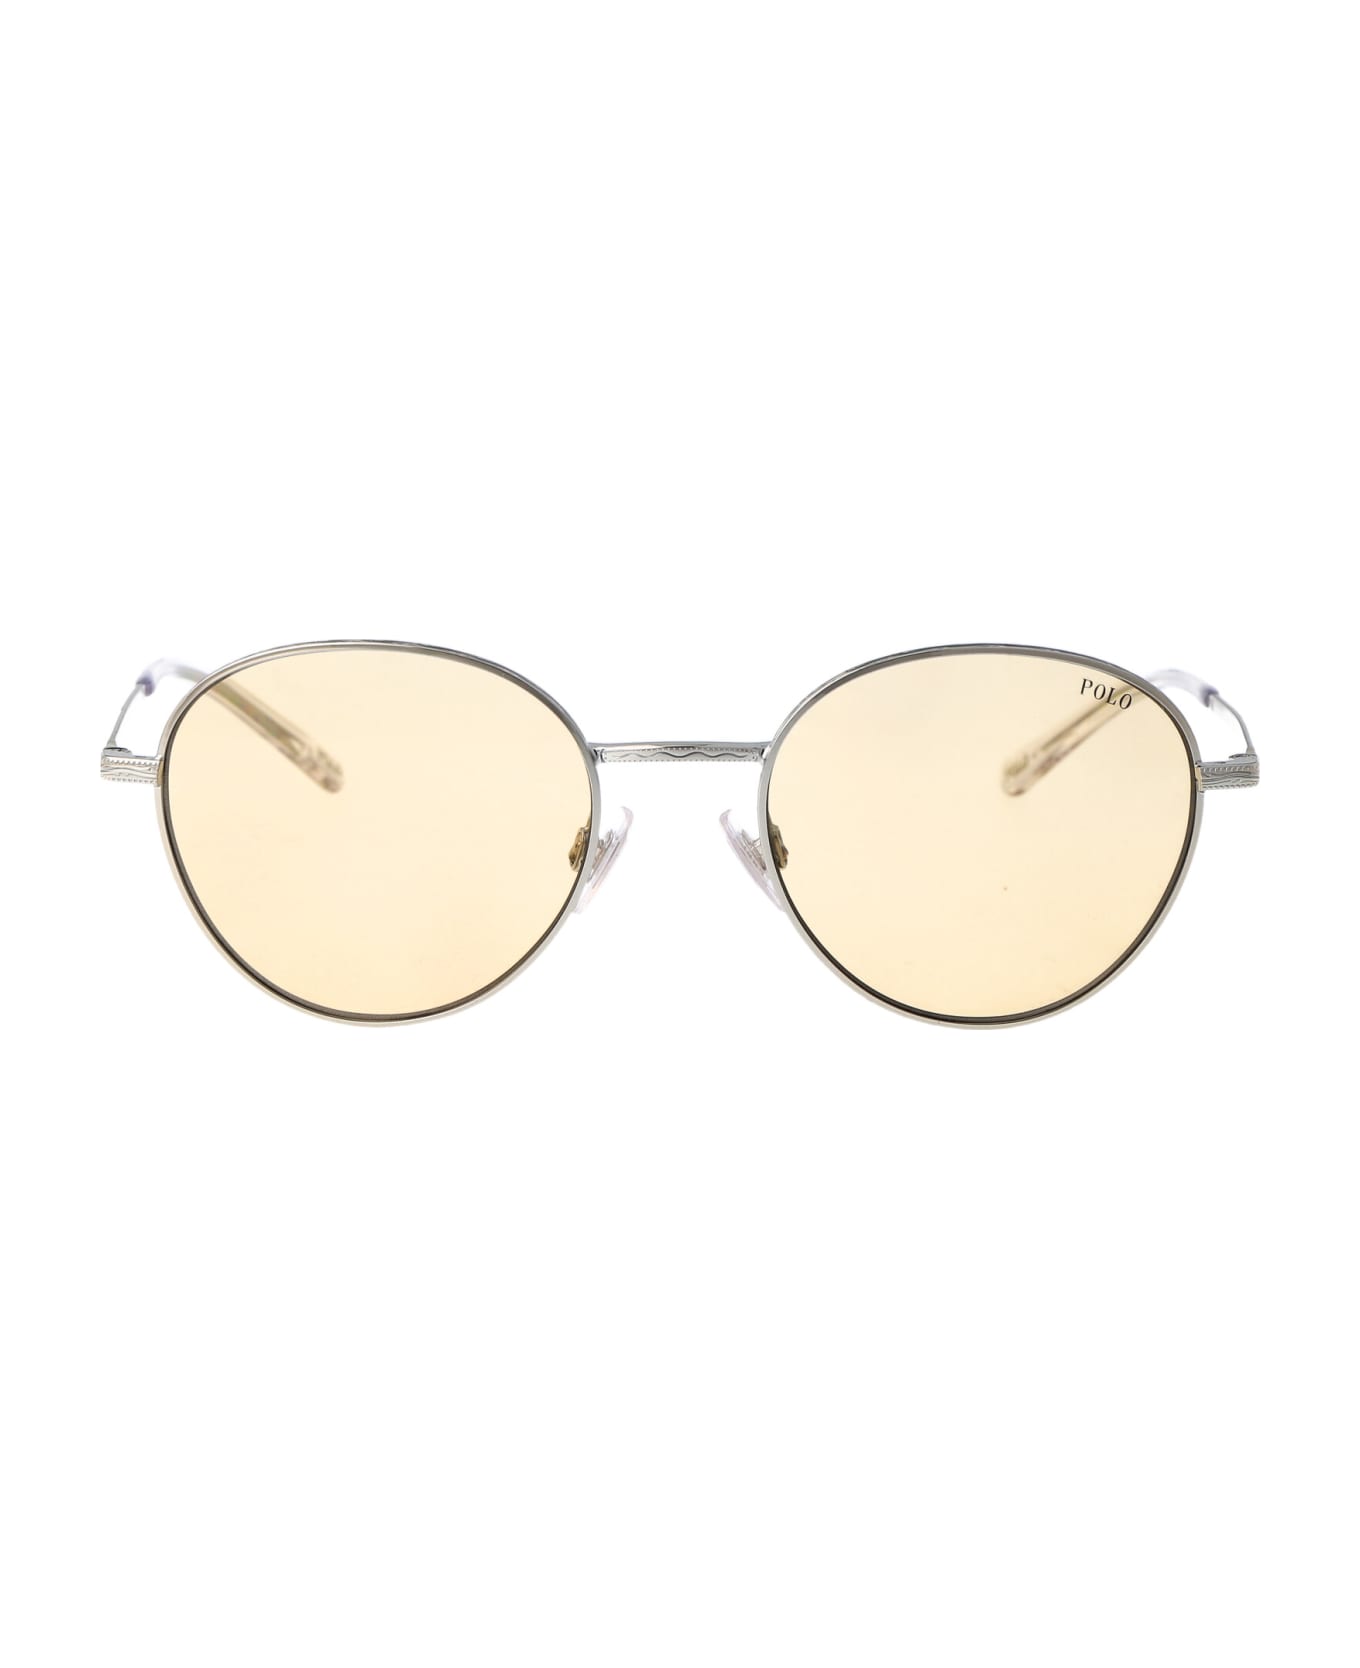 Polo Ralph Lauren 0ph3144 Sunglasses - 9001/8 Shiny Silver